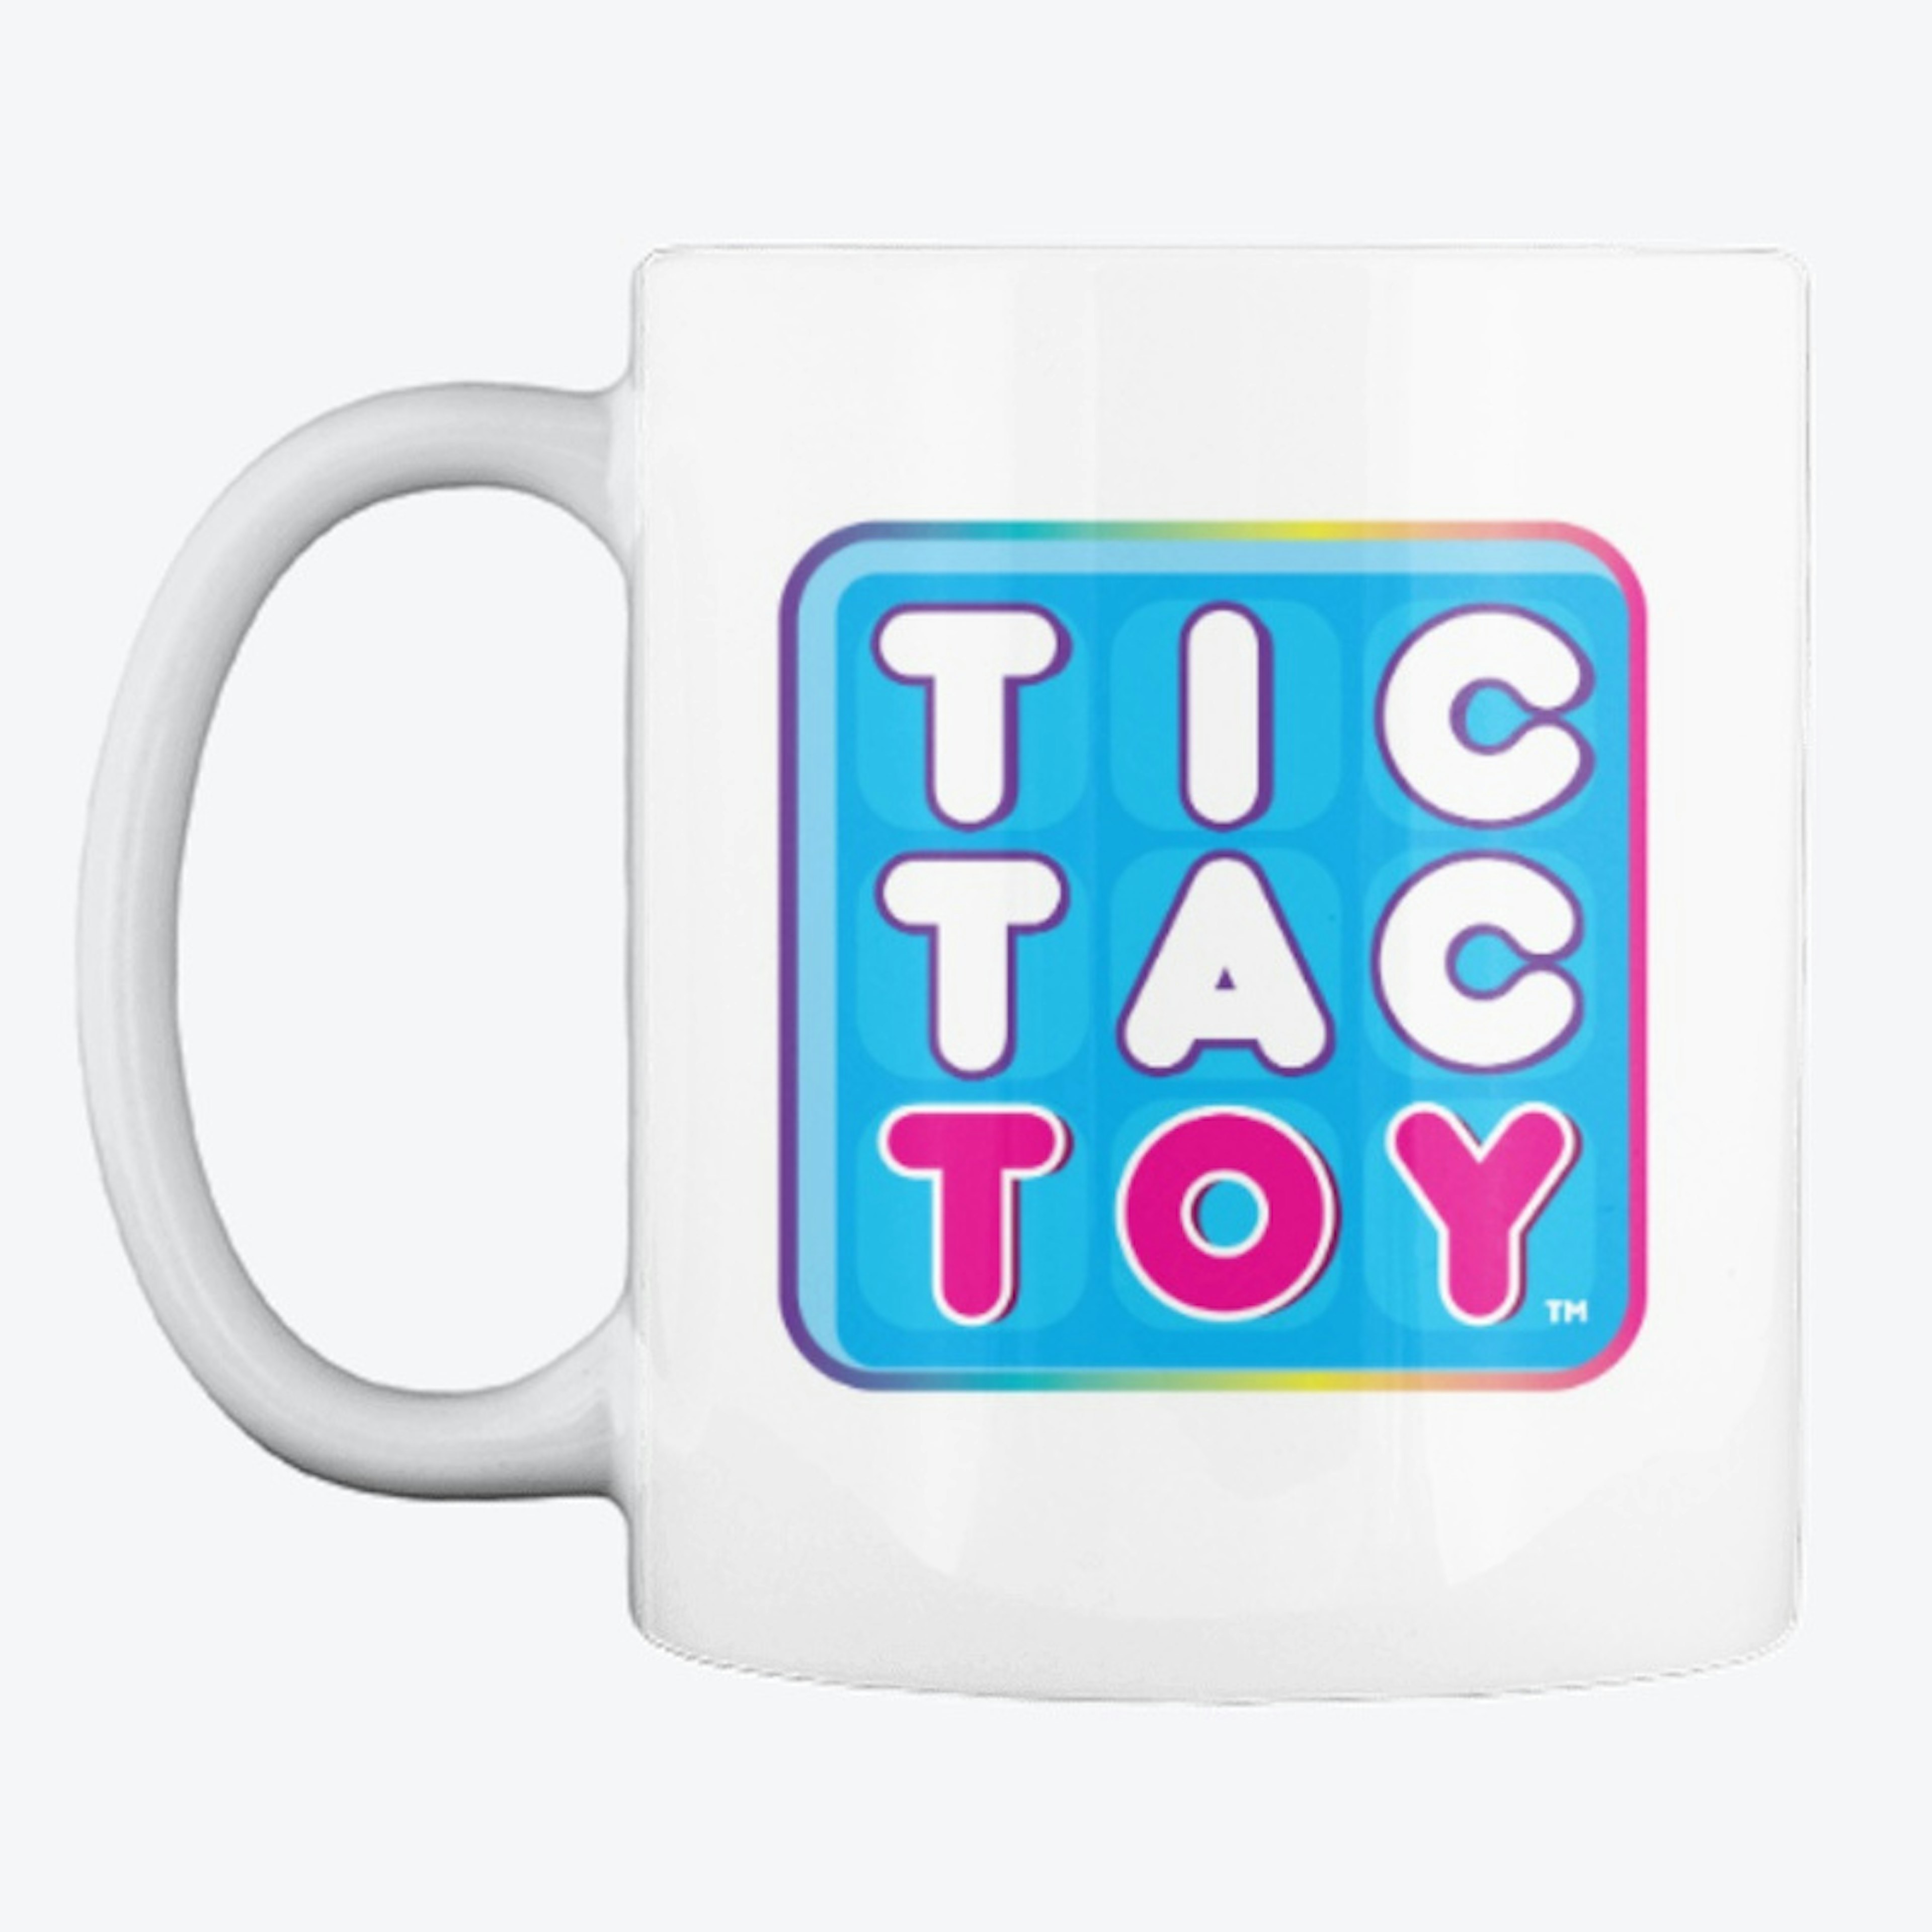 Tic Tac Toy Merch